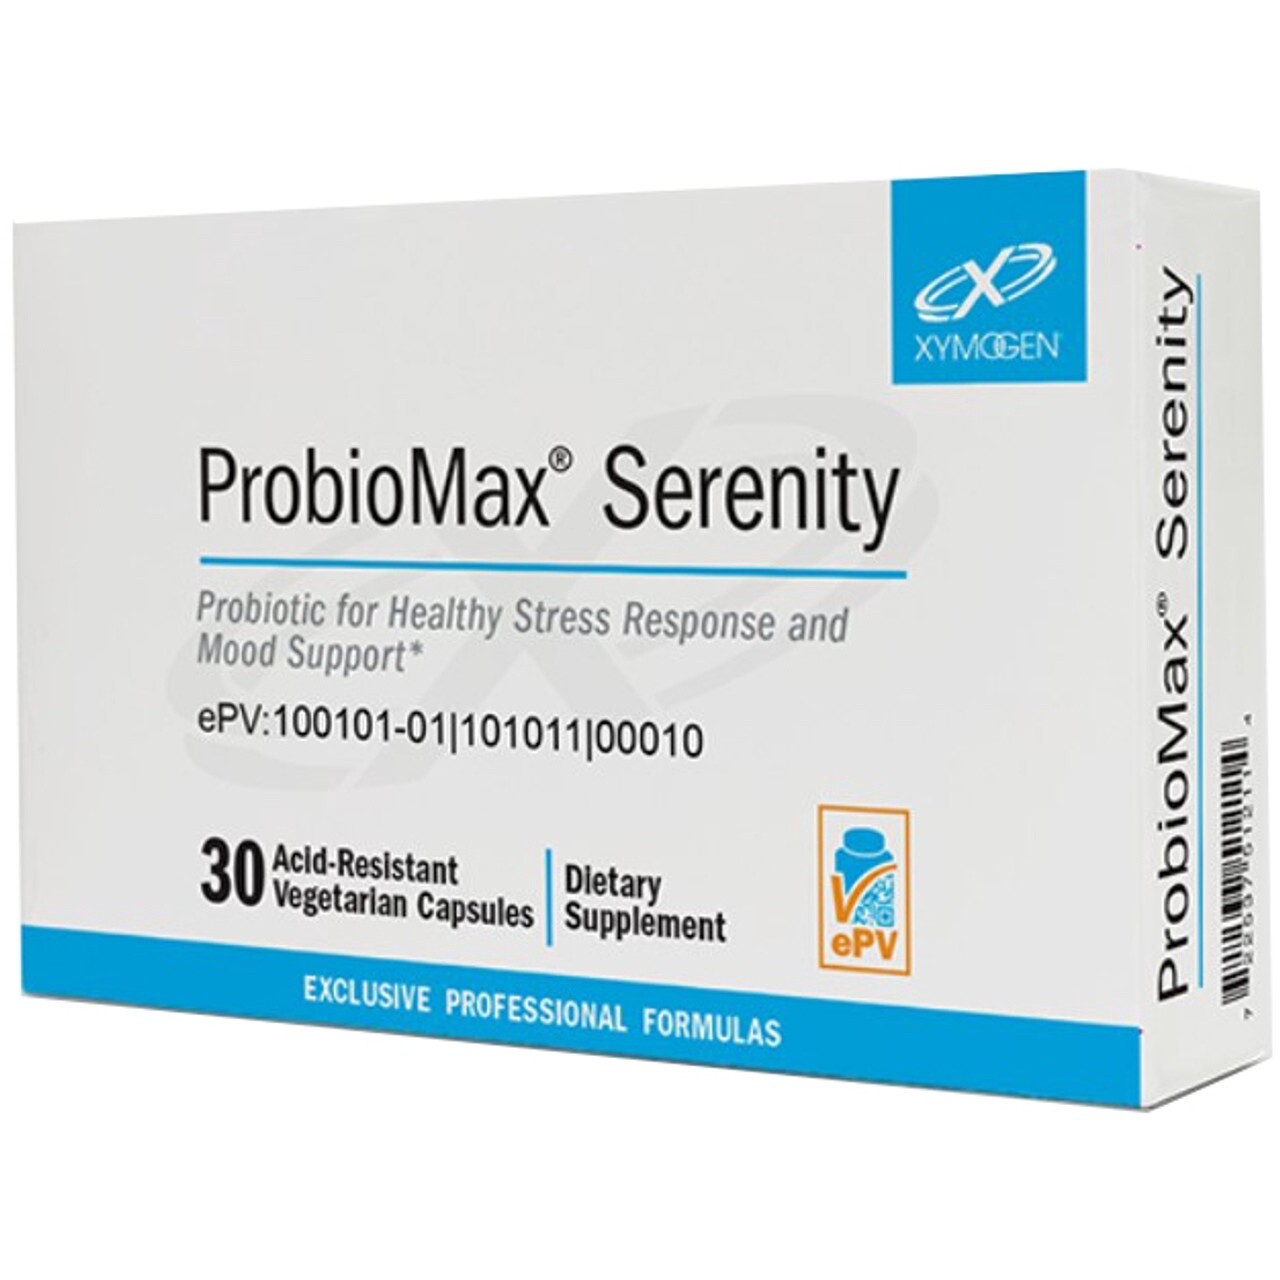 ProbioMax® Serenity (30ct)